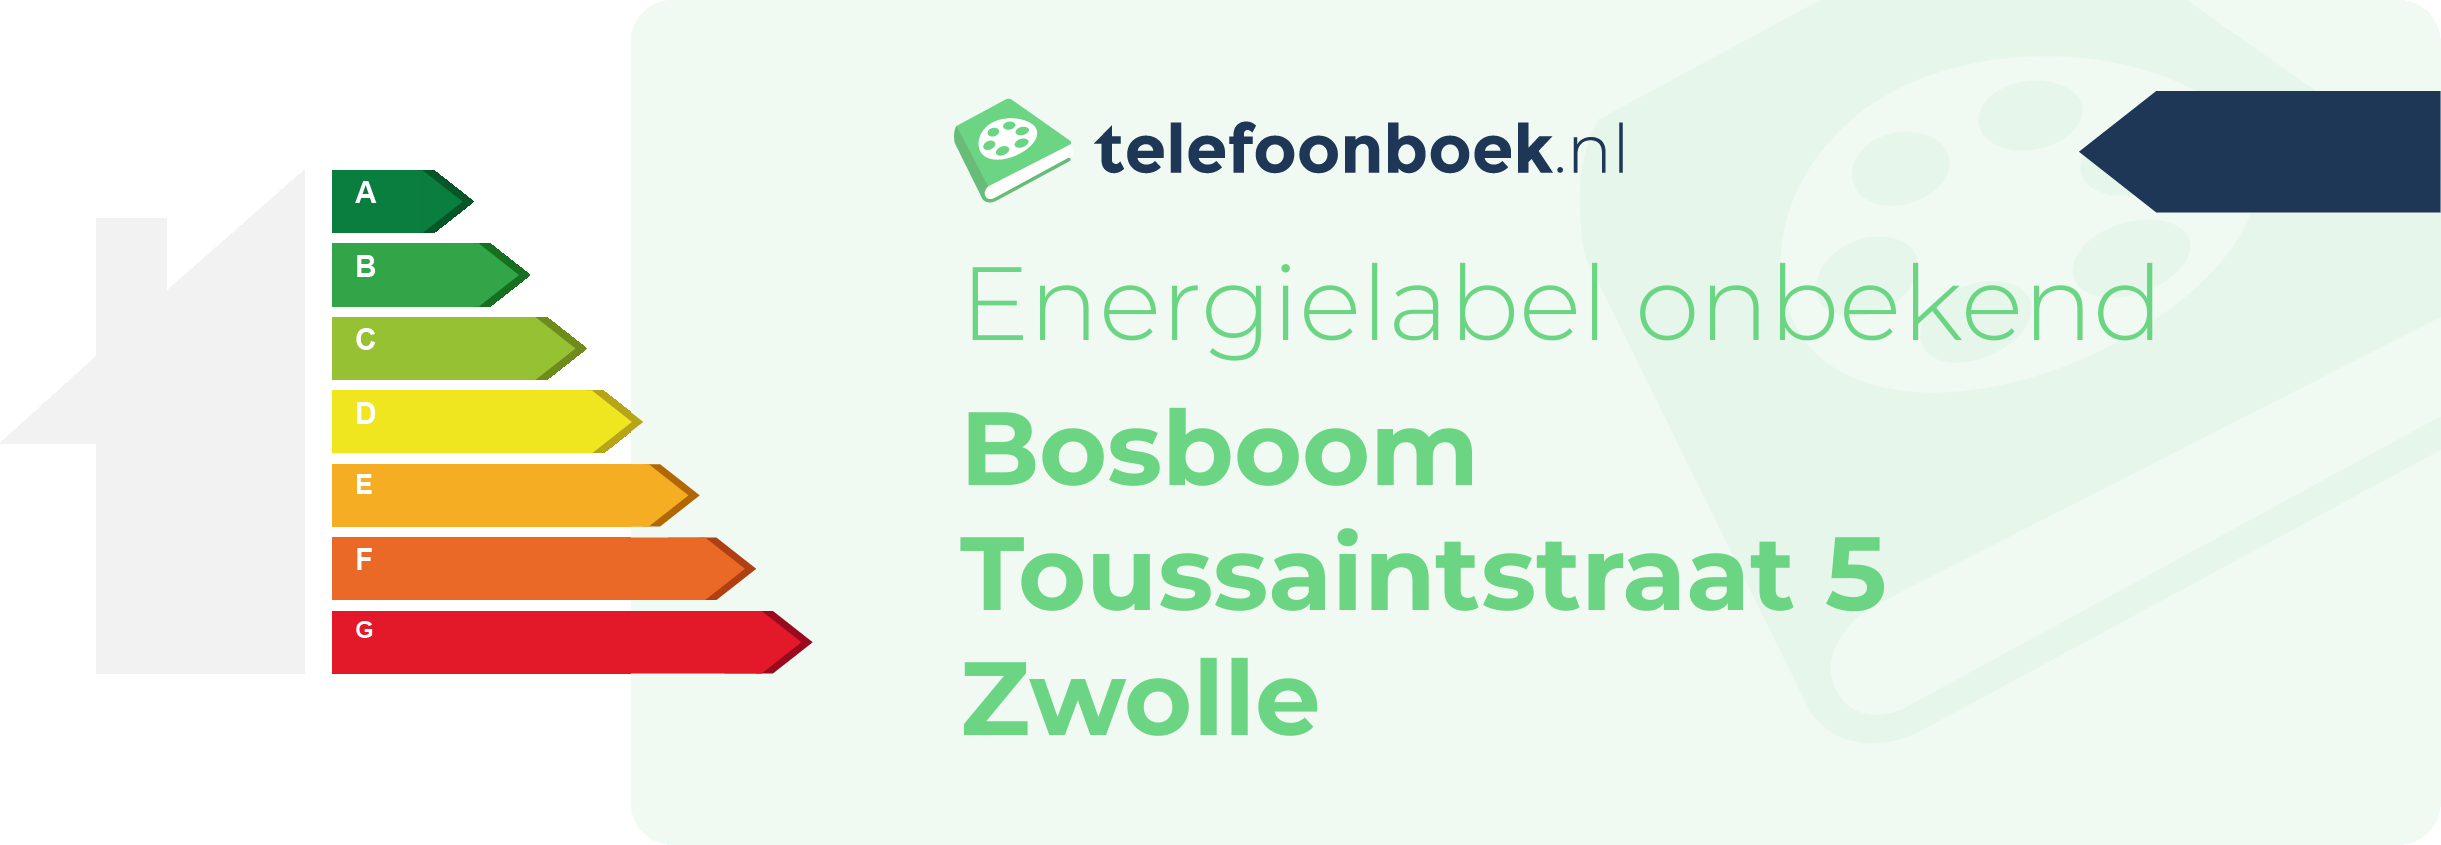 Energielabel Bosboom Toussaintstraat 5 Zwolle